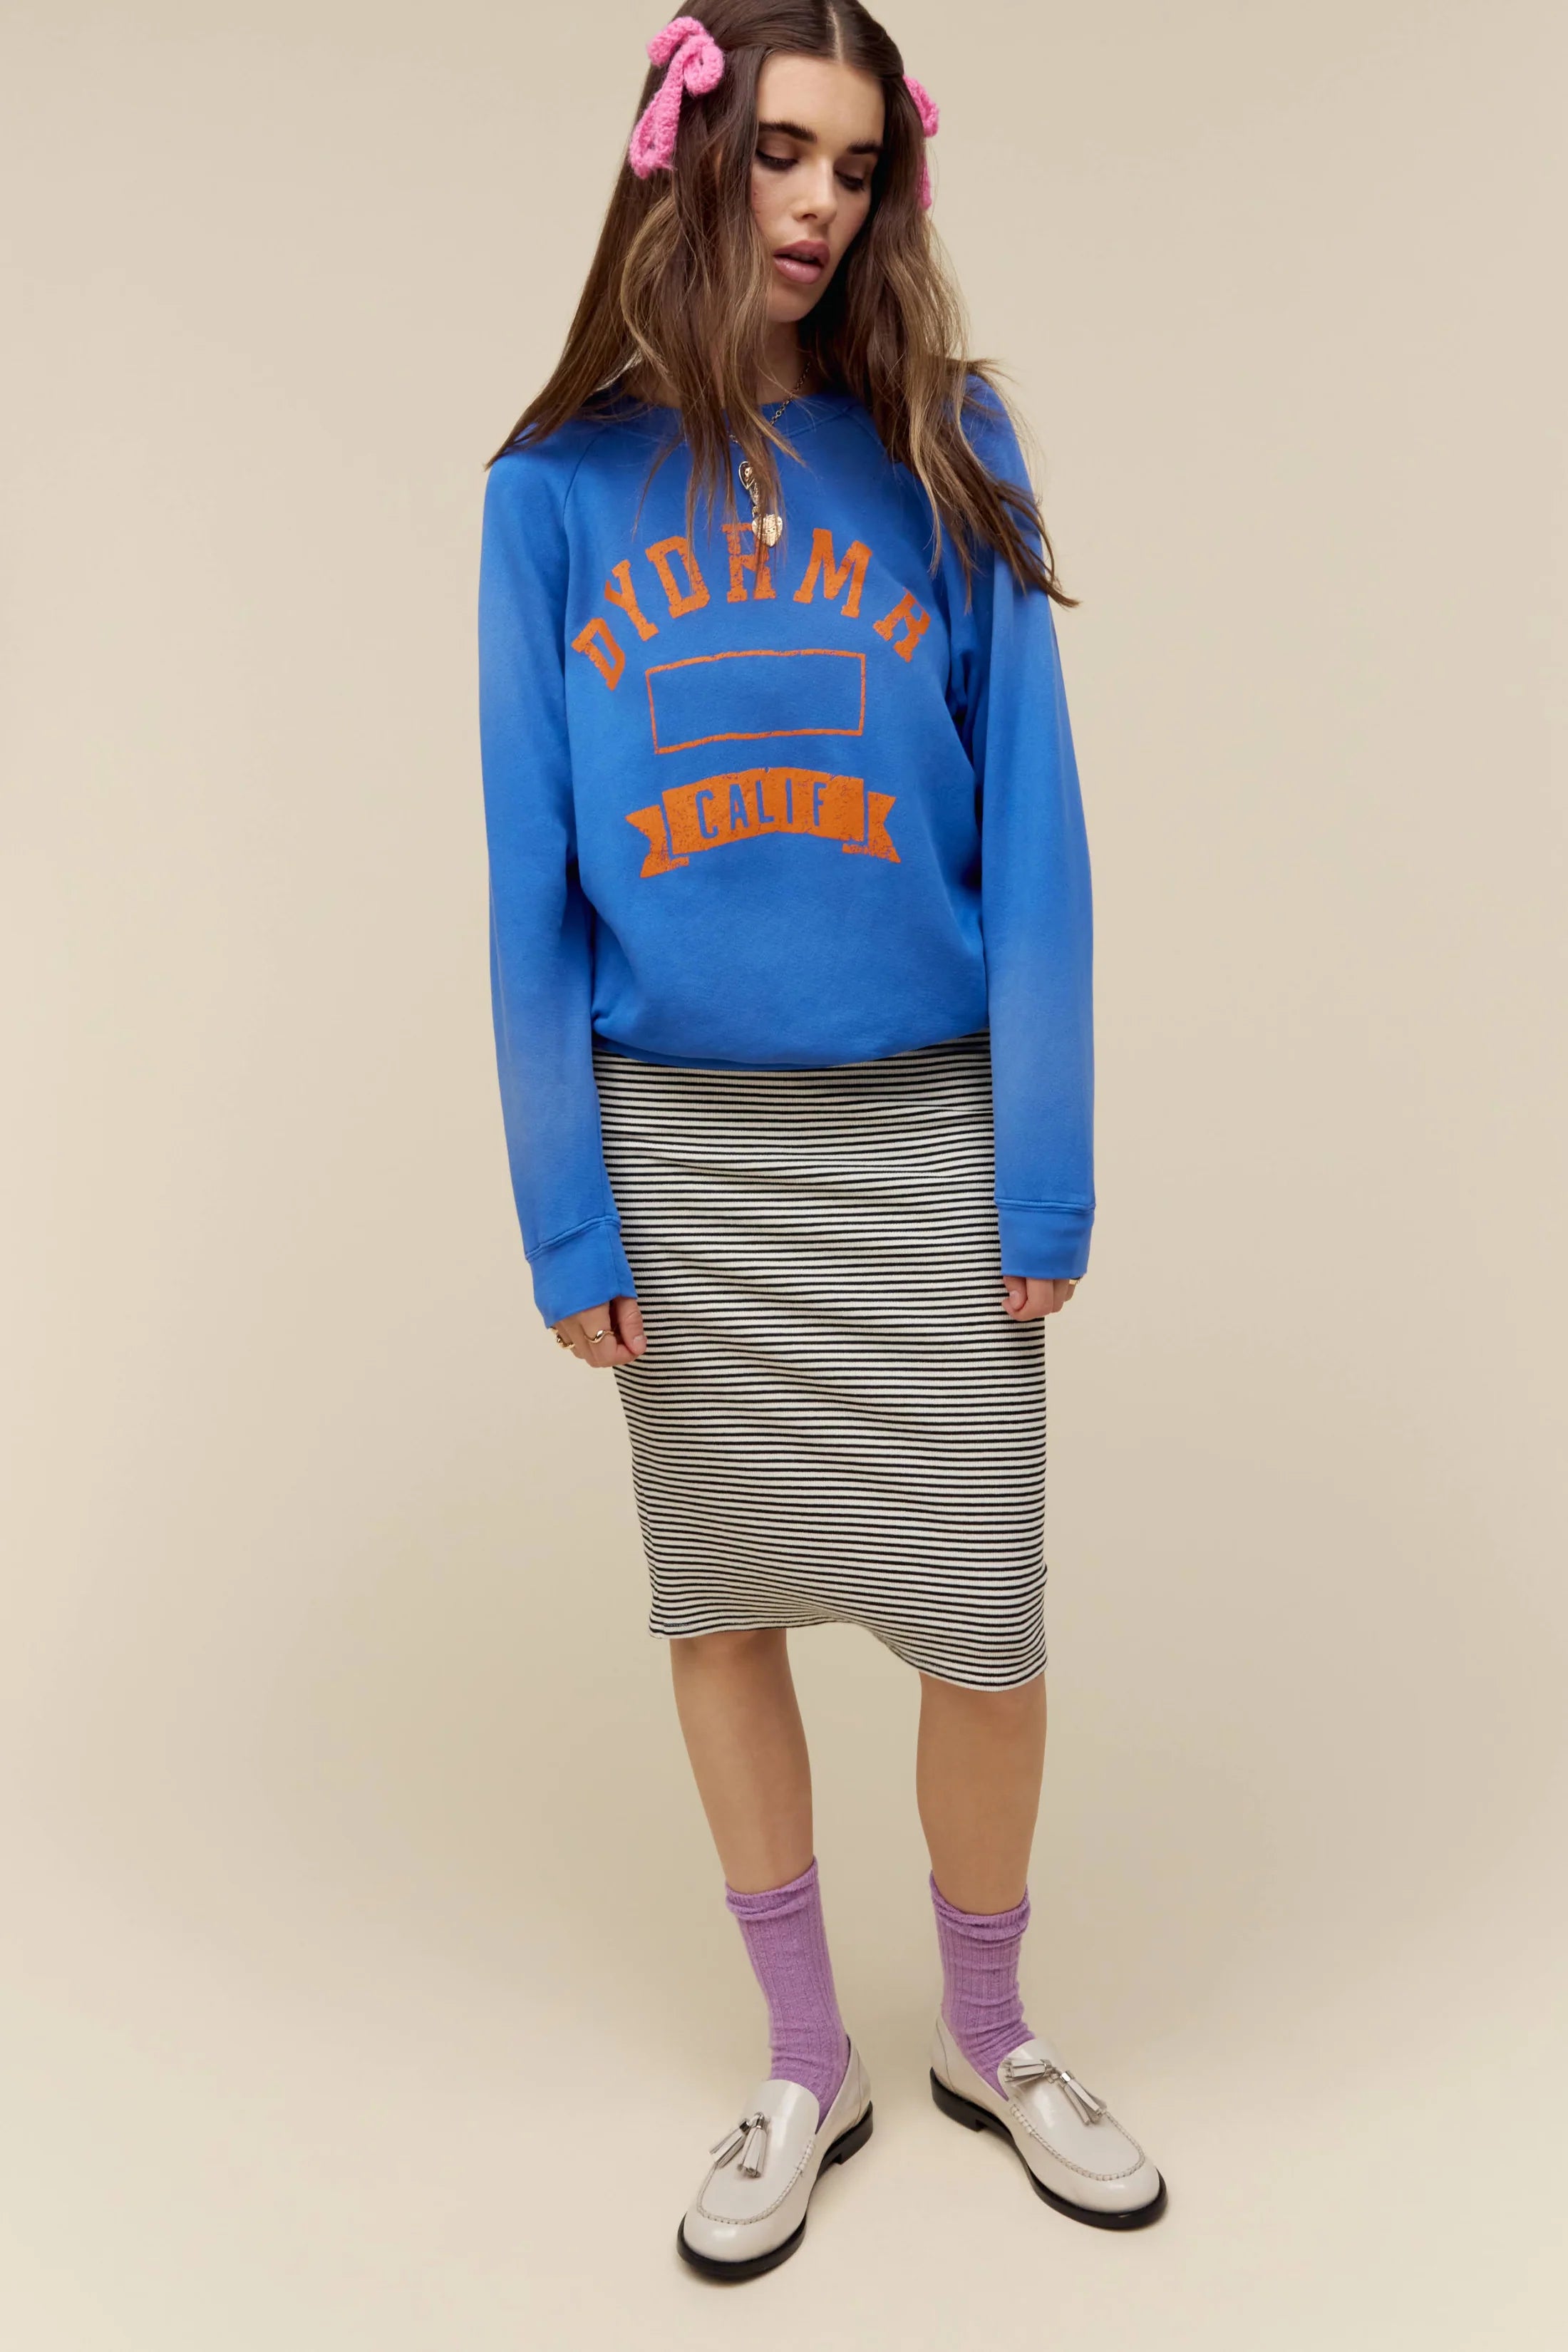 DYRMR Collegiate Vintage Sweatshirt – Bella Chic